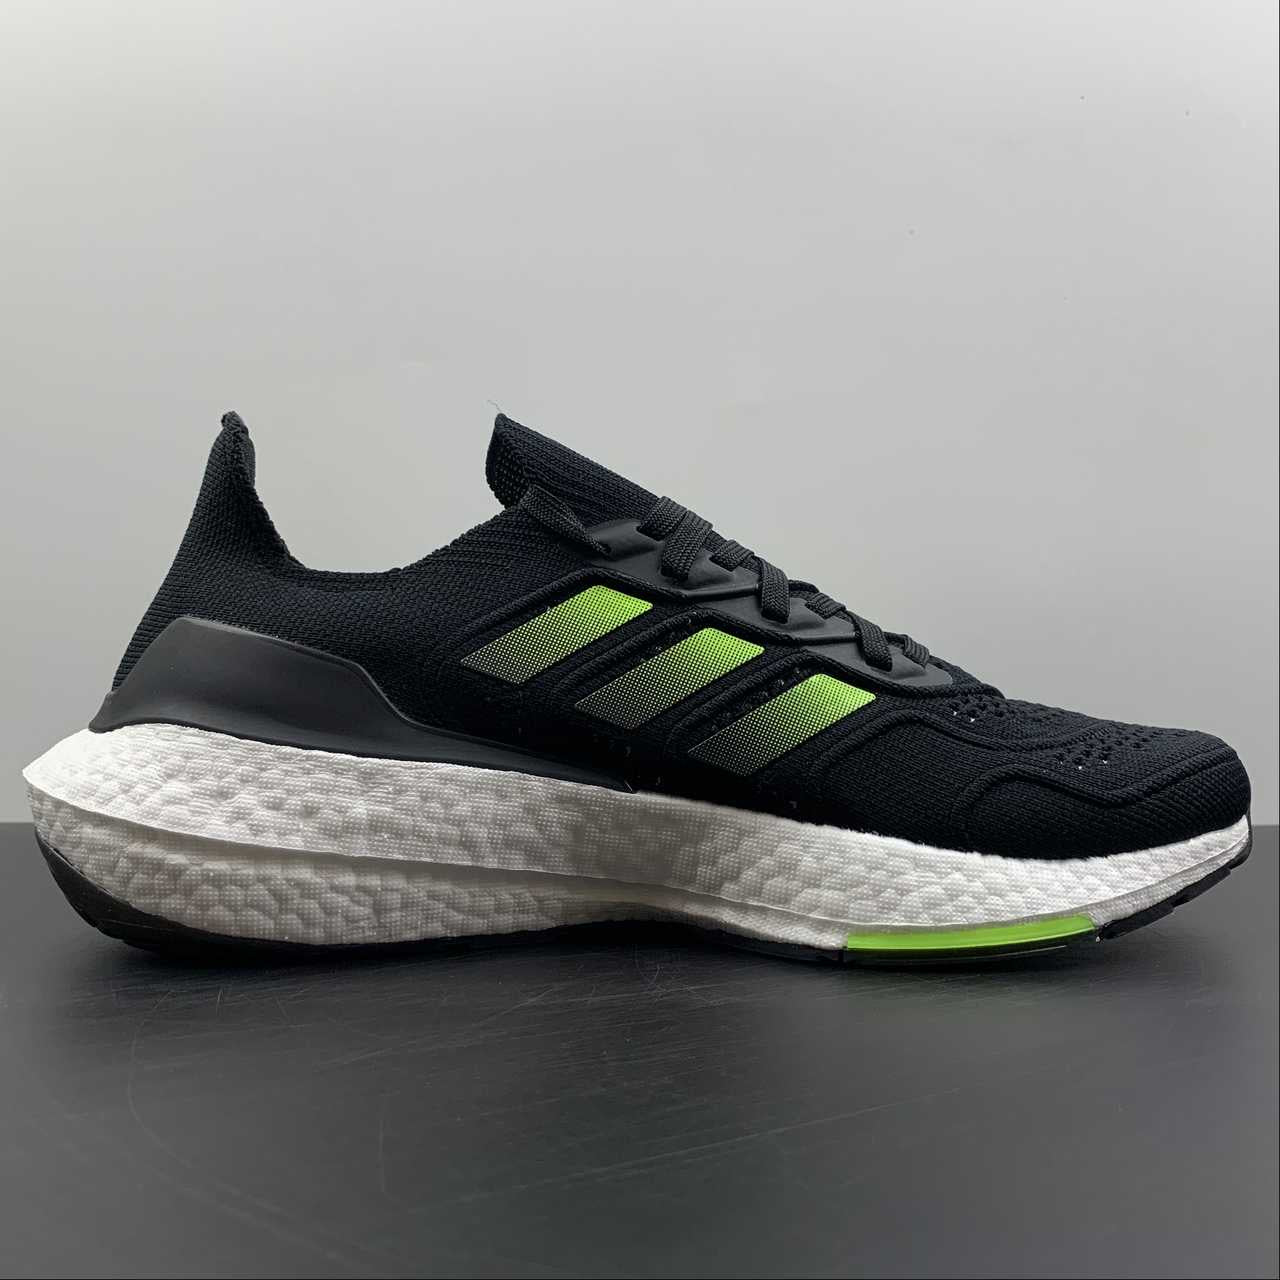 Adidas ultraboost black/yellow shoes